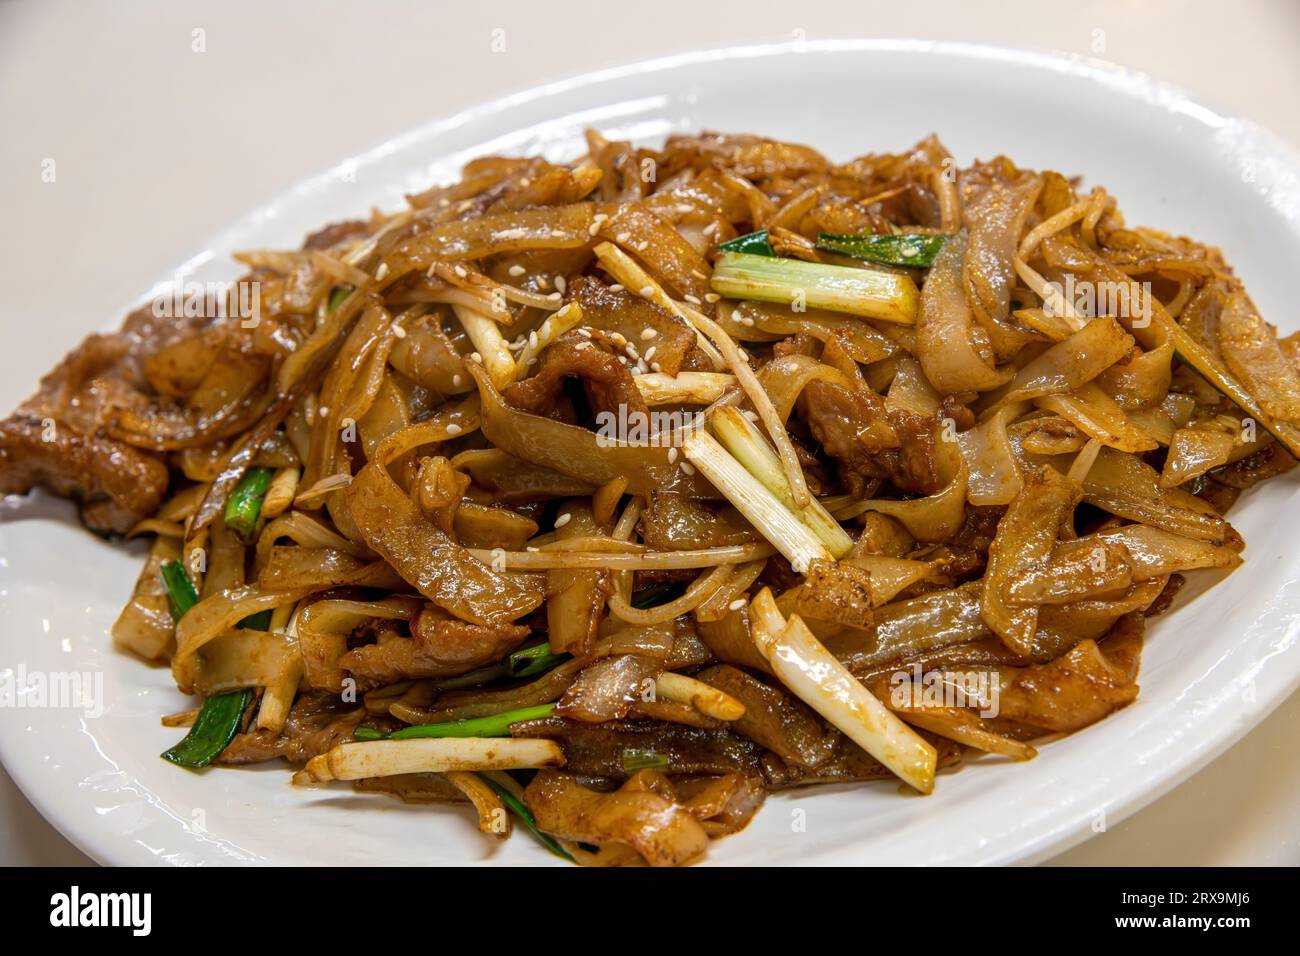 Ristorante Cinese, uno dei piatti piu' popolari in Hong Kong, Stir Fried Beef Noodles, Hong Kong, Cina. Foto Stock